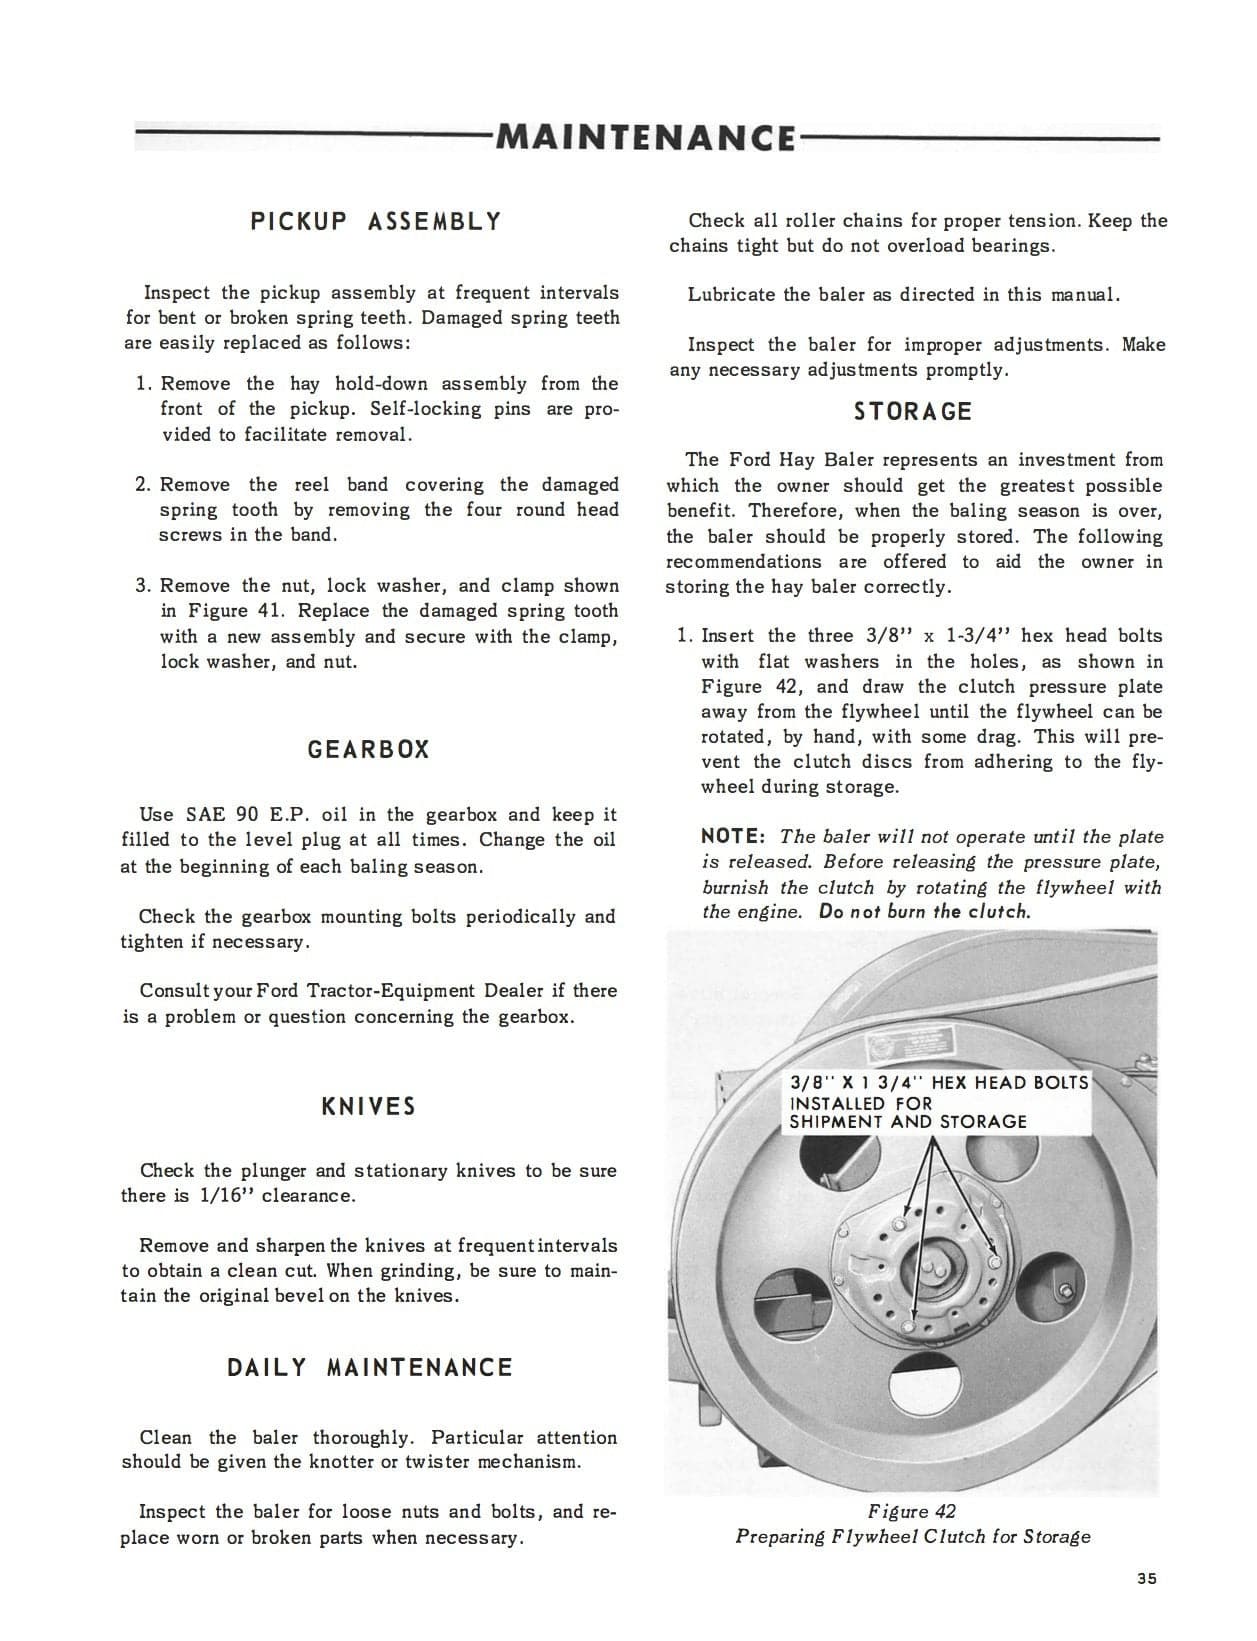 Ford 540 Hay Baler - Operator's Manual - Ag Manuals - A Provider of Digital Farm Manuals - 3